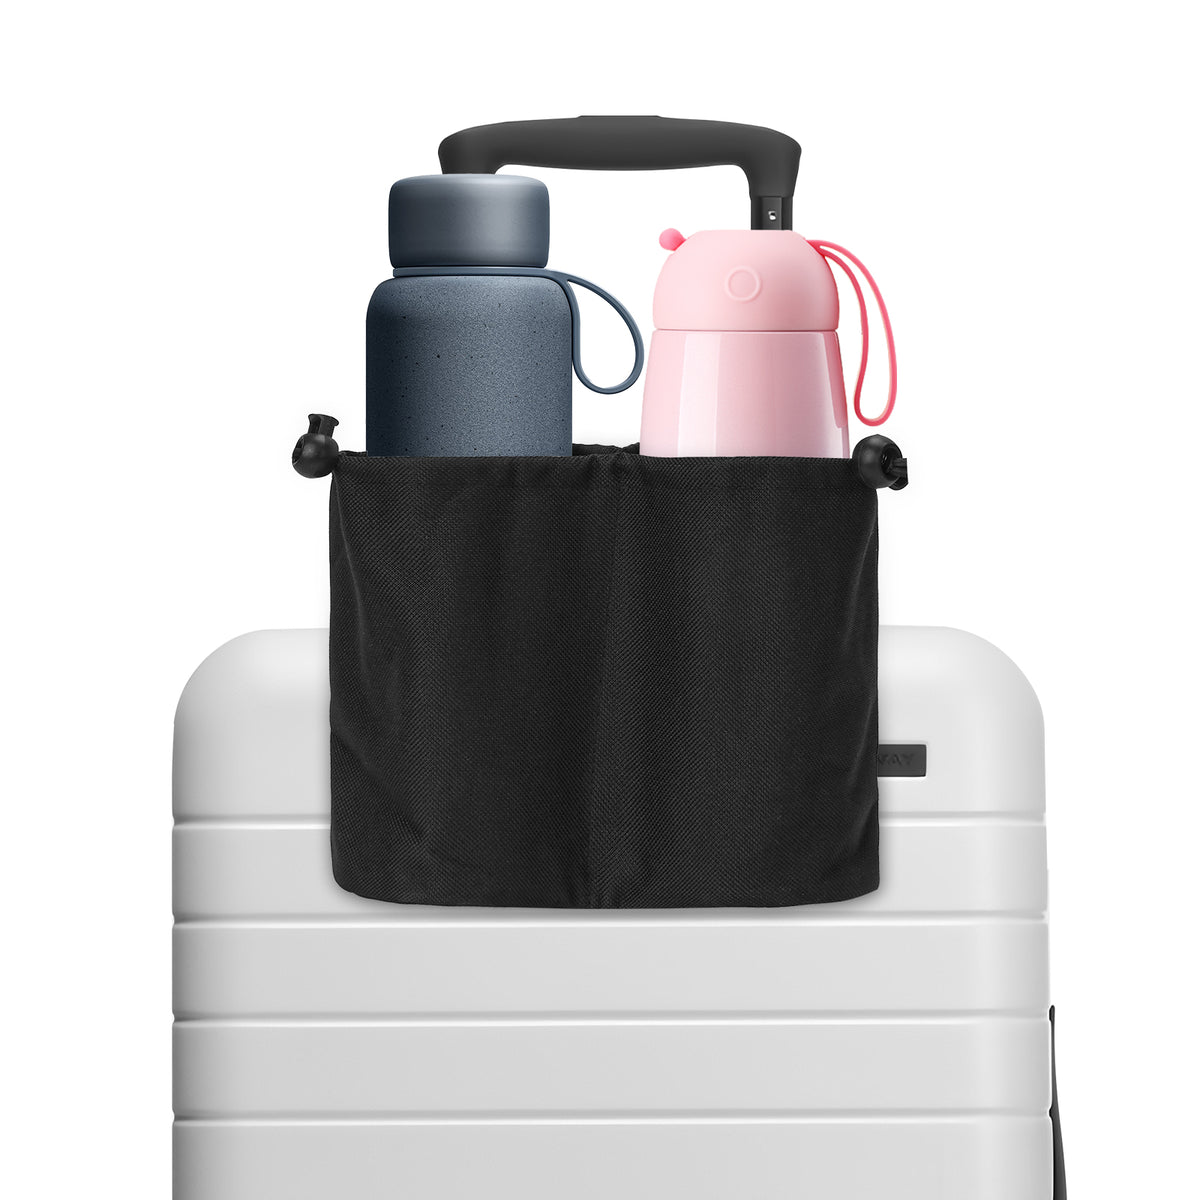 Adorila Luggage Travel Cup Holder, Universal Free Hand Drink Carrier, Drink Caddy Beverage Holder for Luggage (Black)